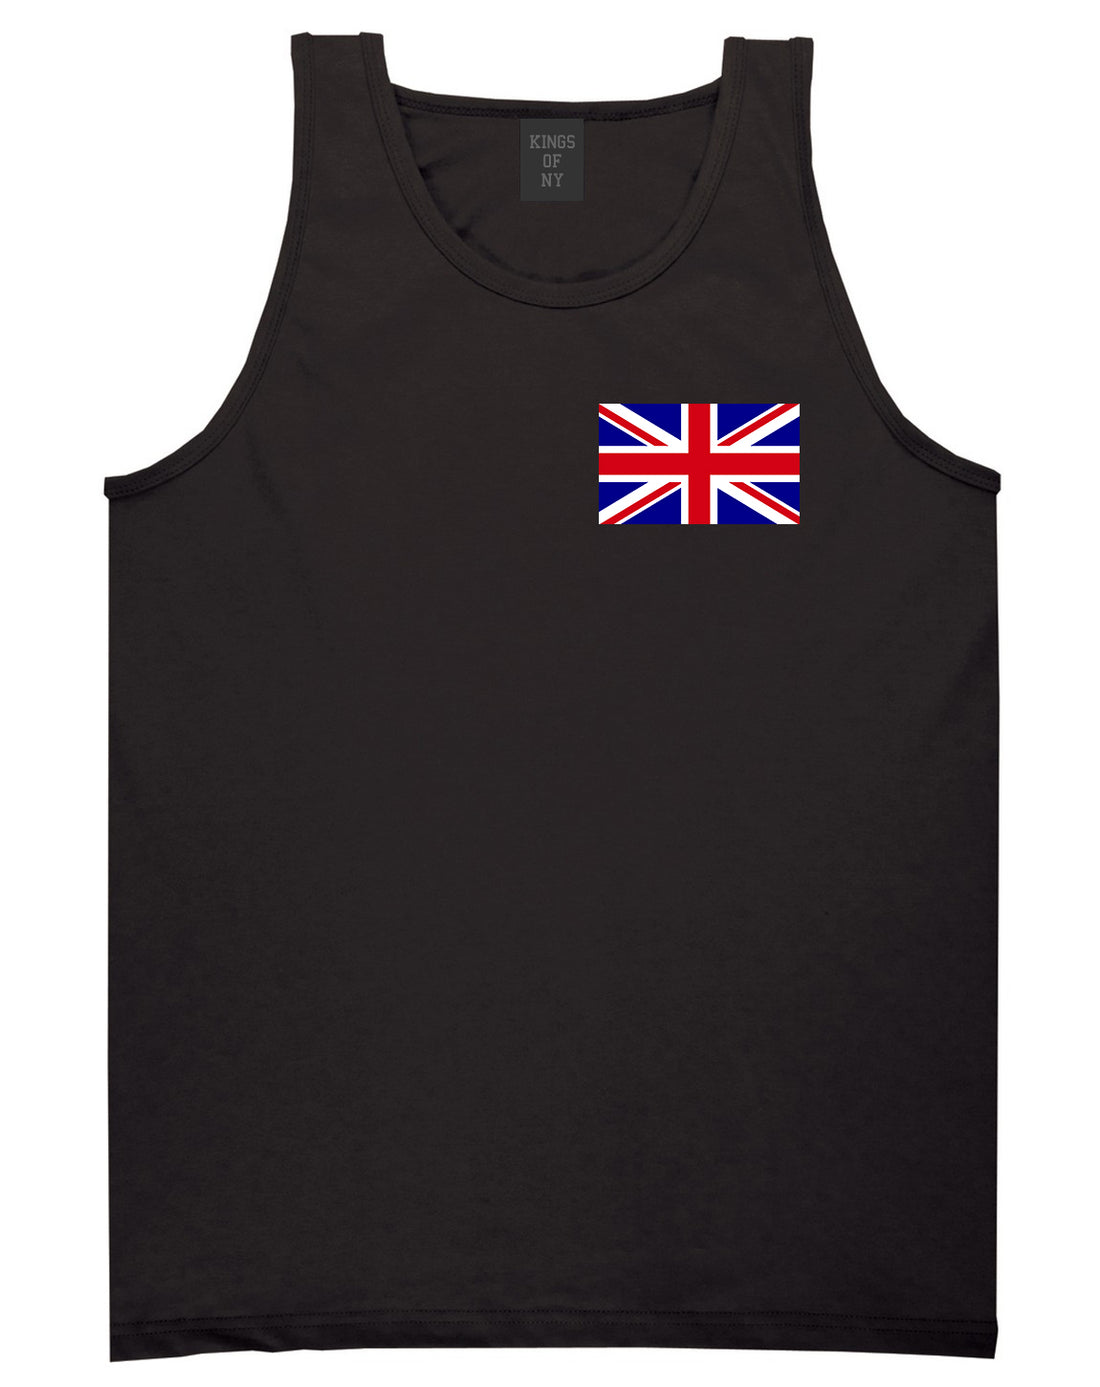 English England Flag Chest Mens Black Tank Top Shirt by KINGS OF NY